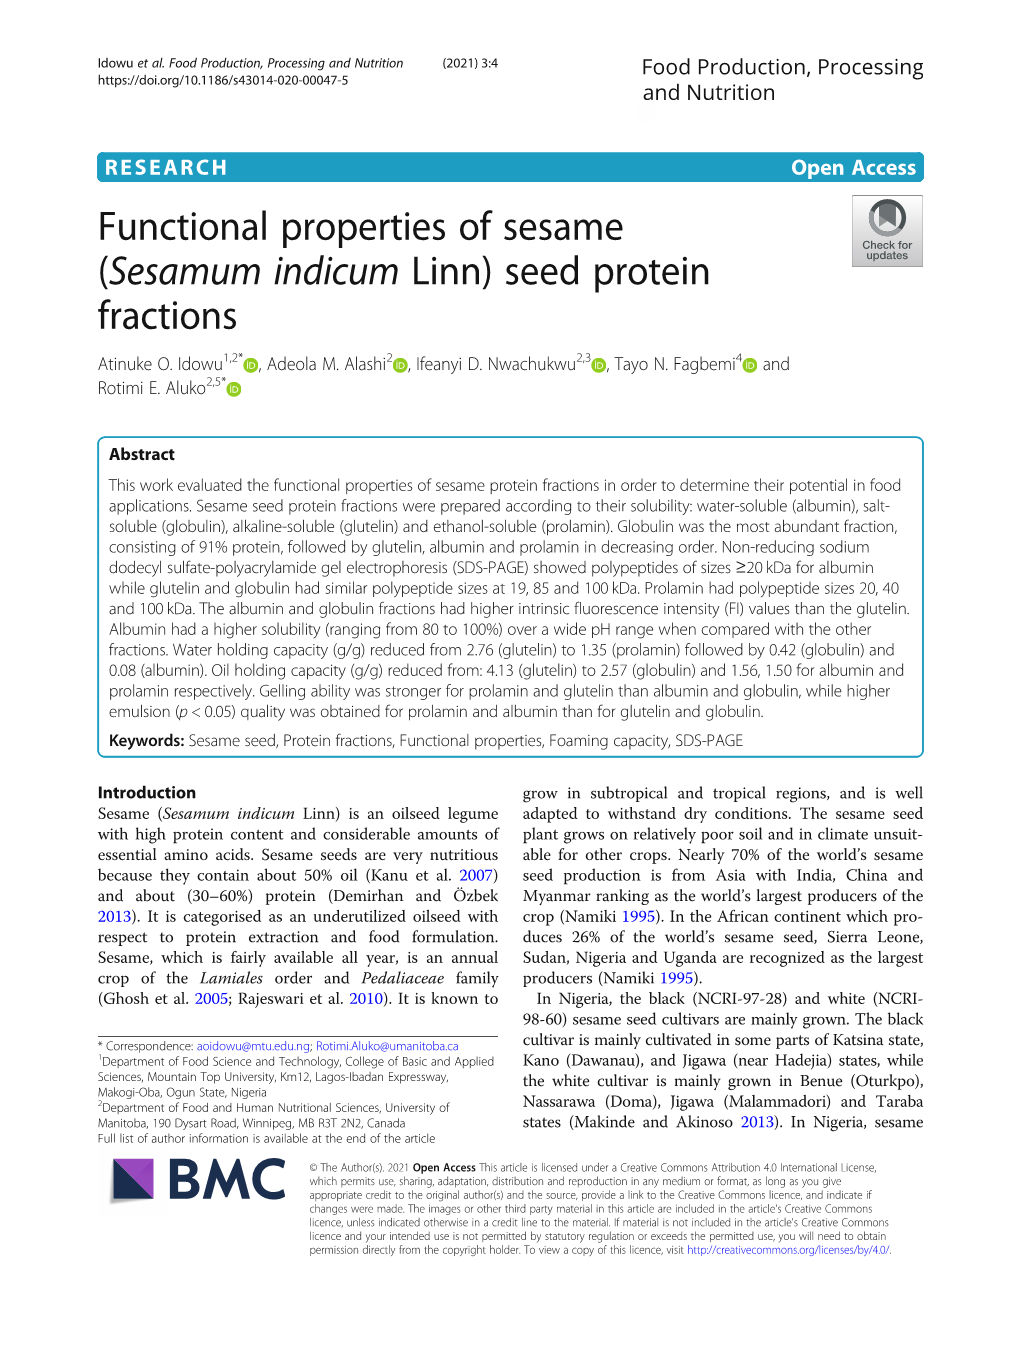 Functional Properties of Sesame (Sesamum Indicum Linn) Seed Protein Fractions Atinuke O